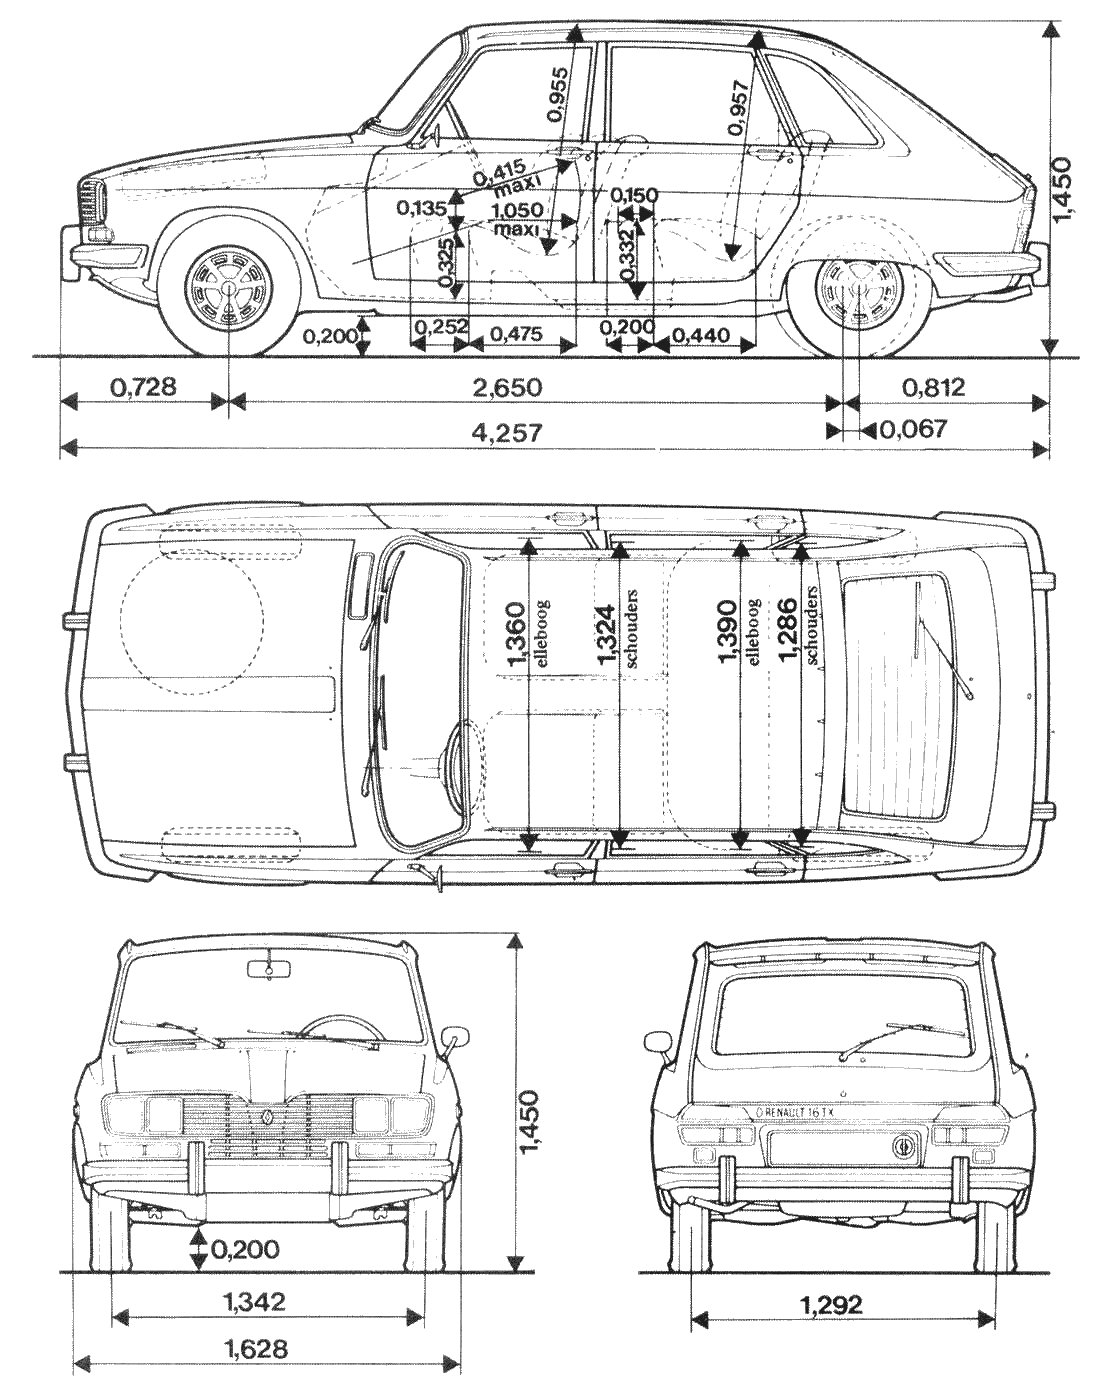 Renault 16 blueprint